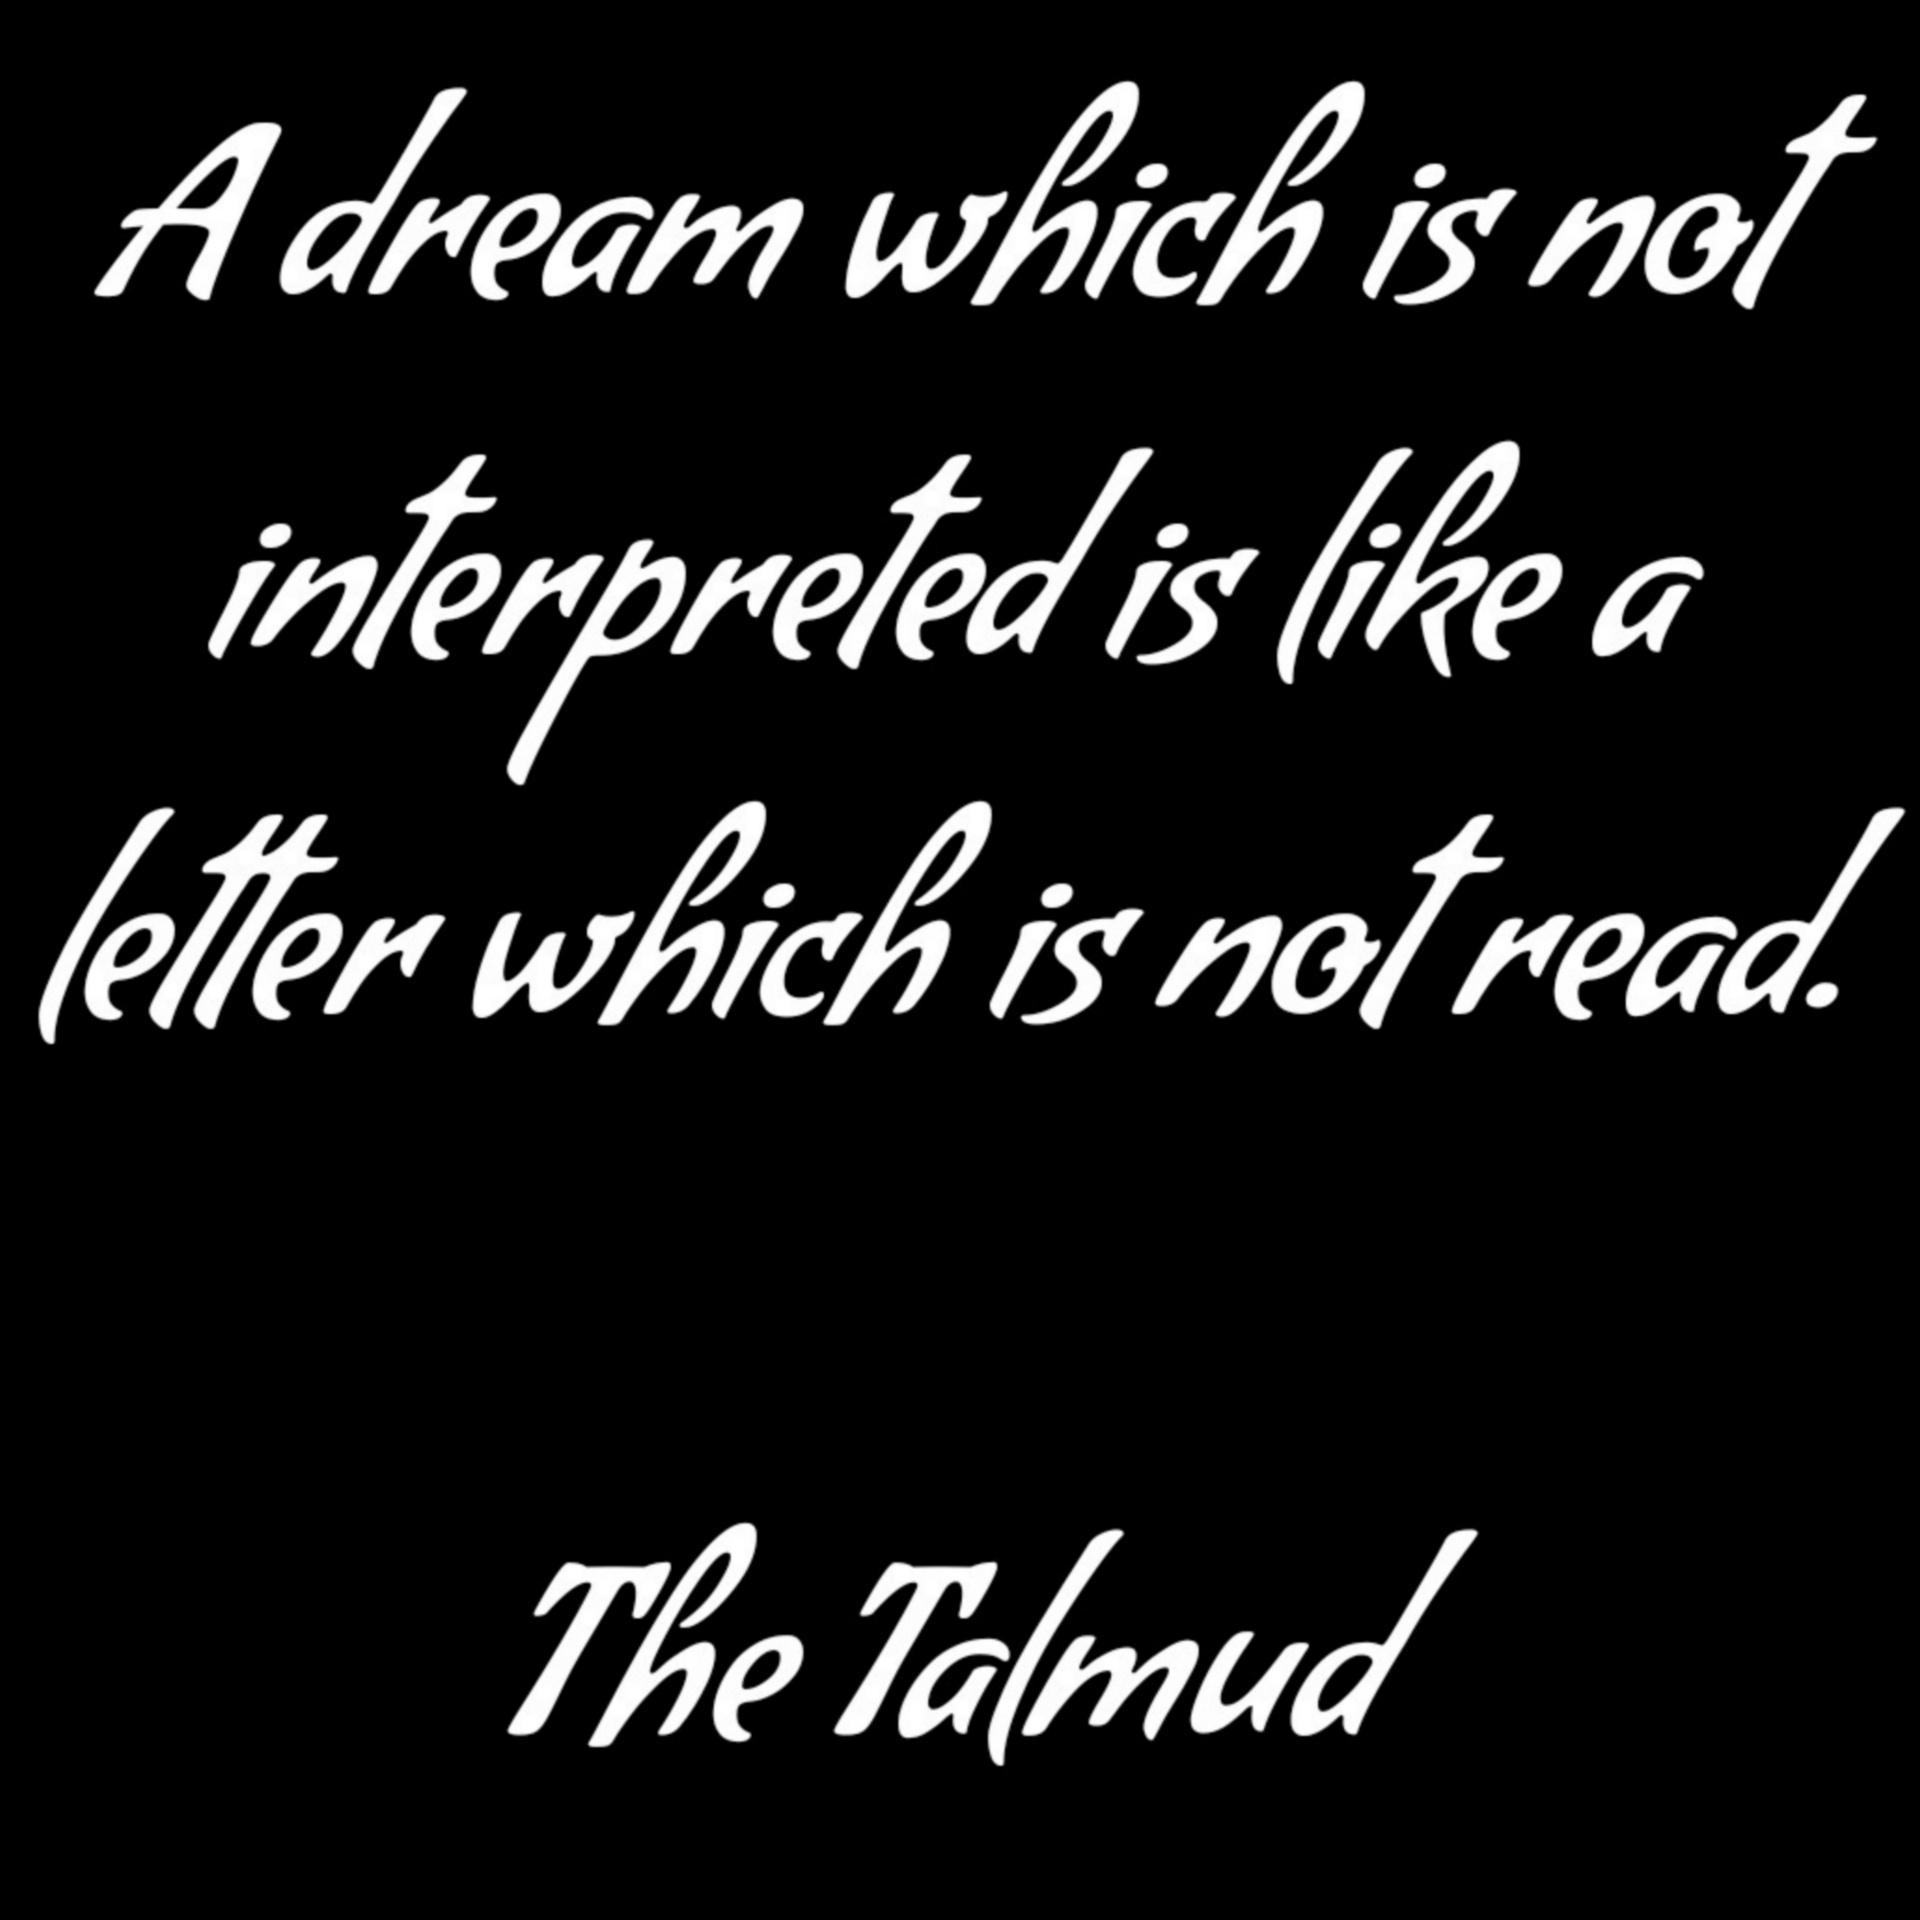 Talmud over droominterpretatie